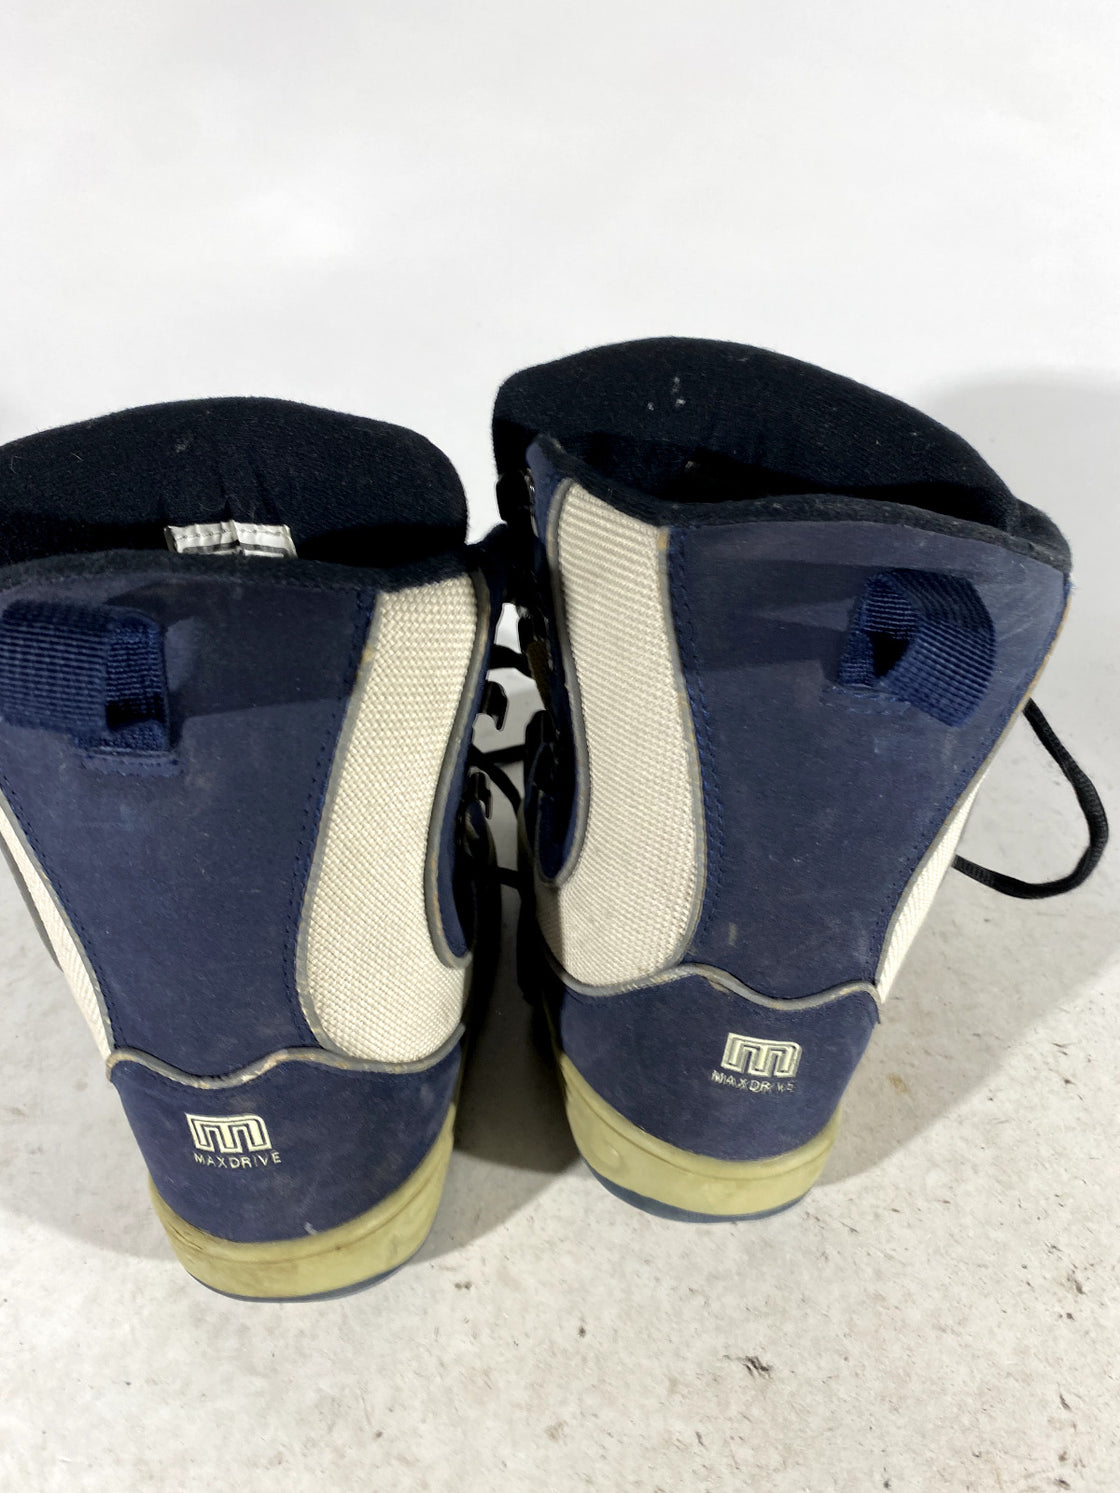 MAX DRIVE Snowboard Boots Youth Kids Size EU32  US1 Mondo 200 mm